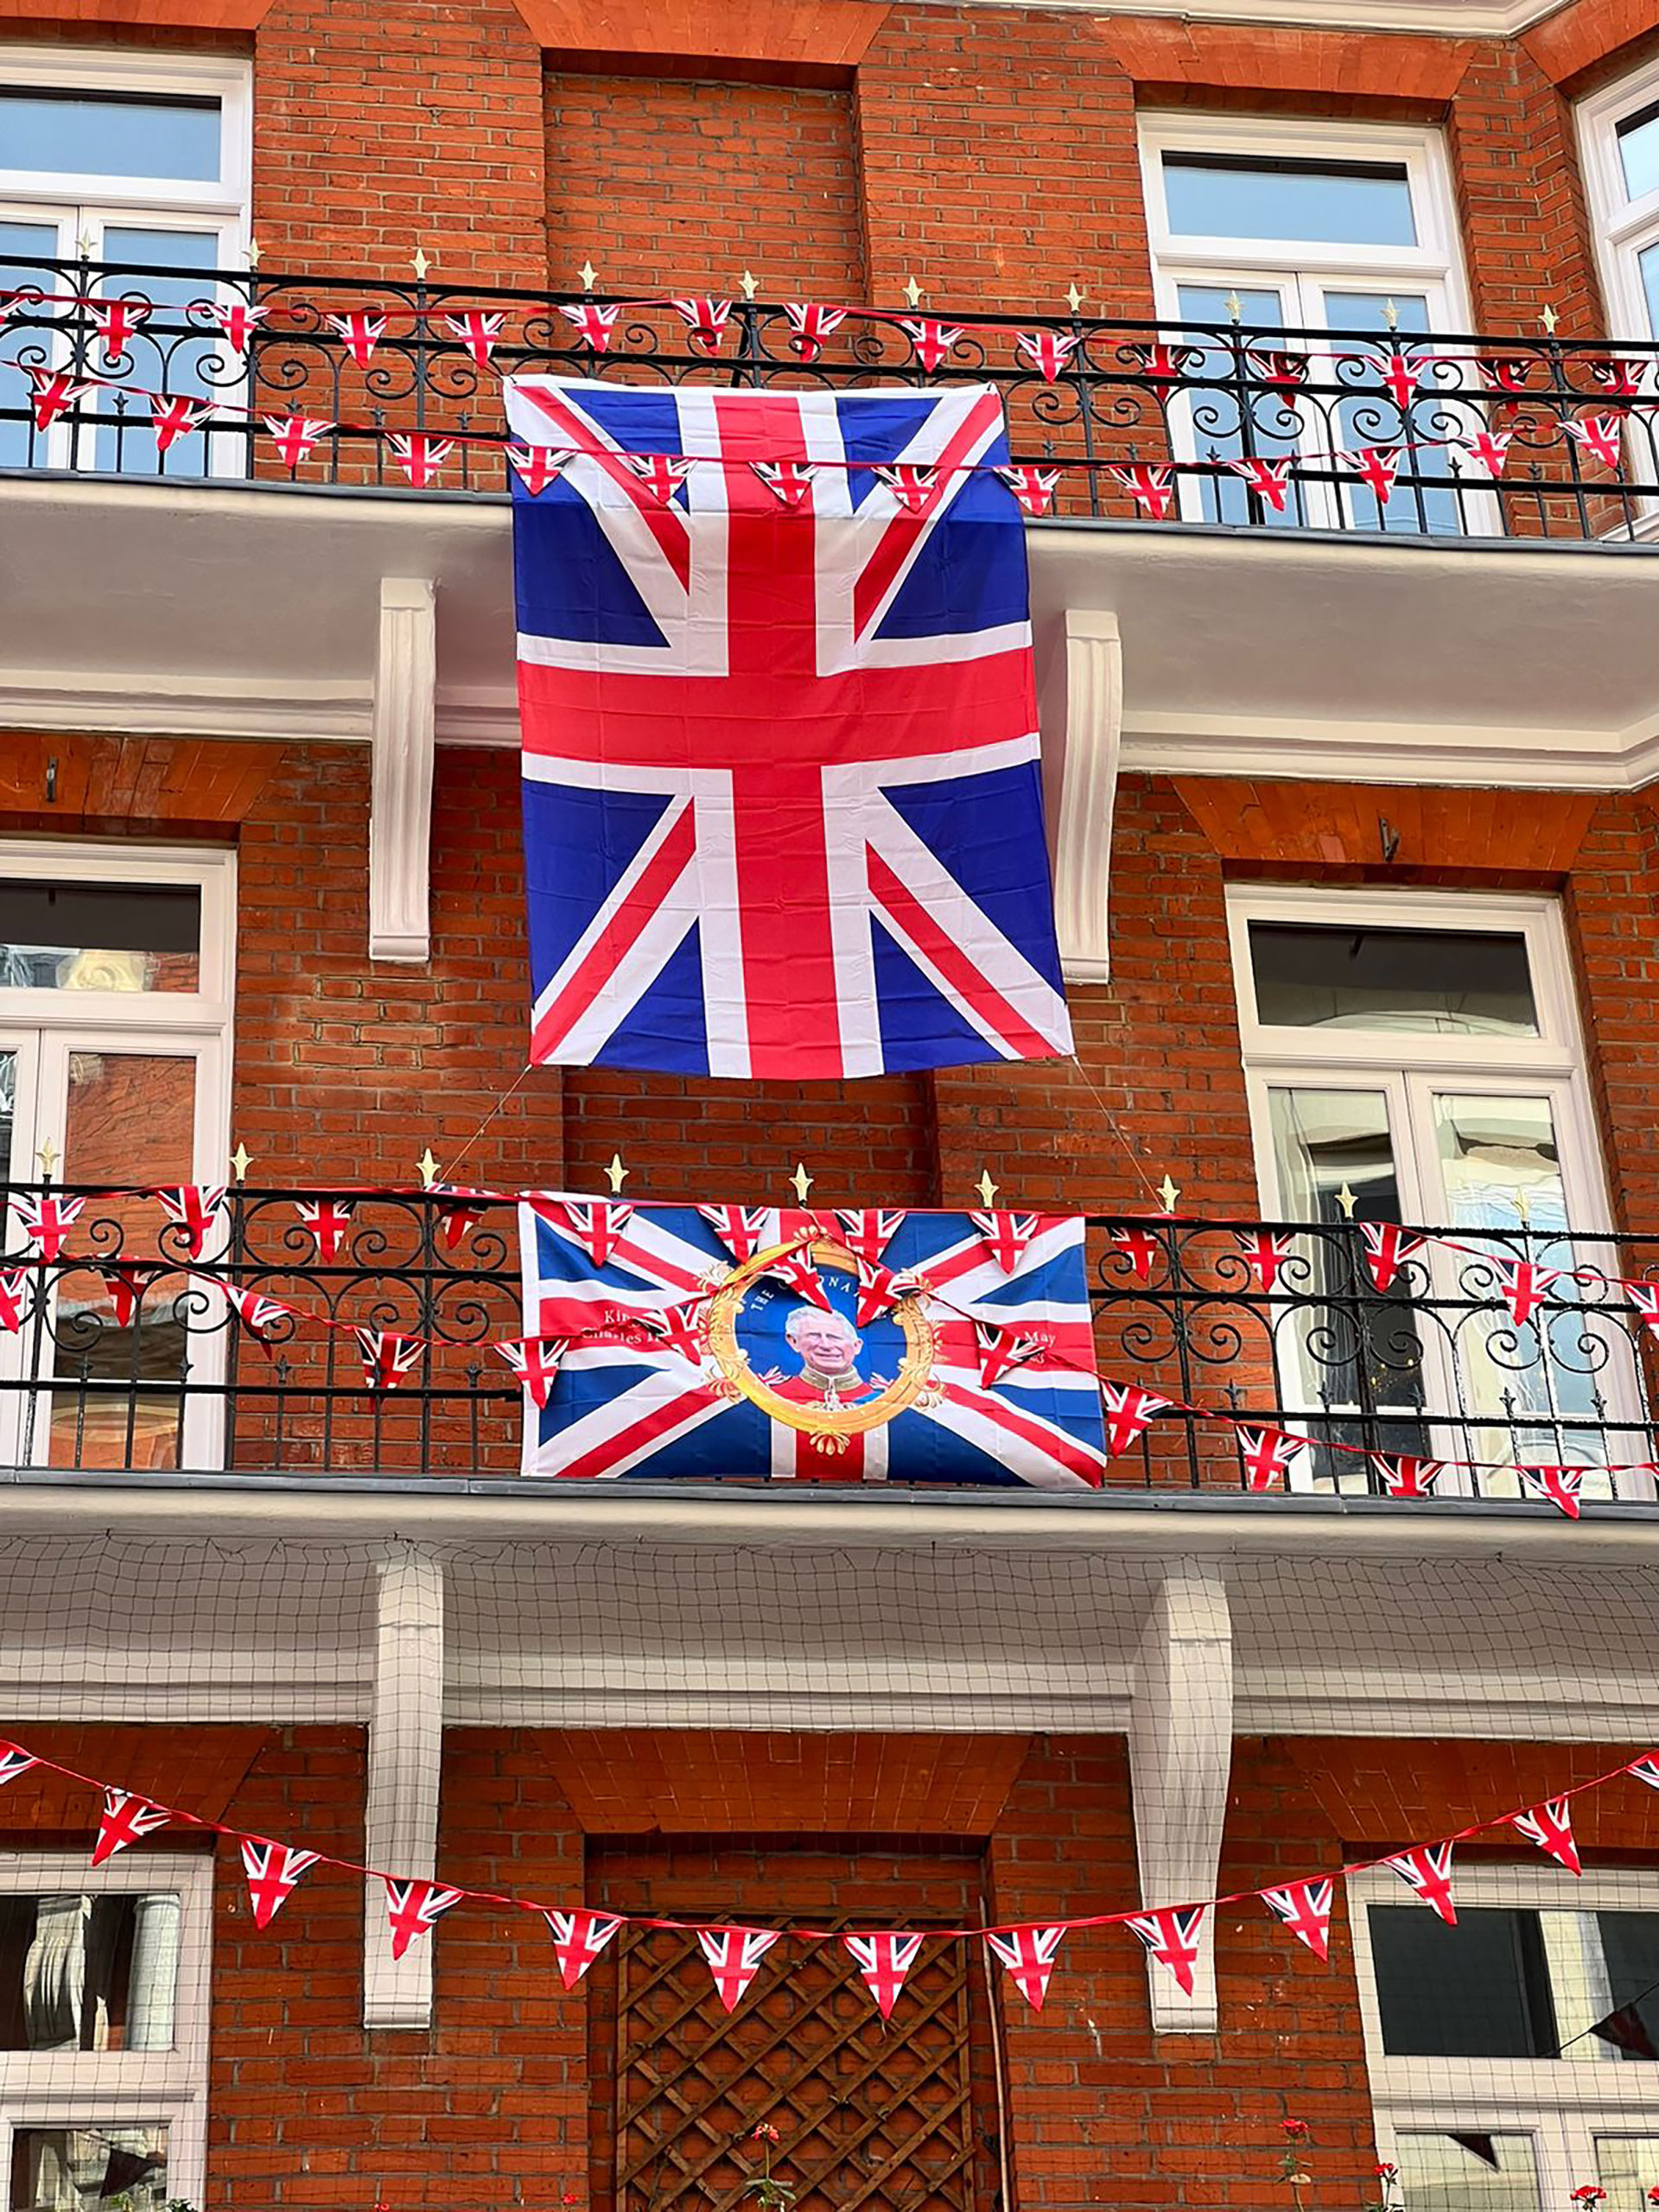 Londres se vistió de fiesta para esta celebración histórica